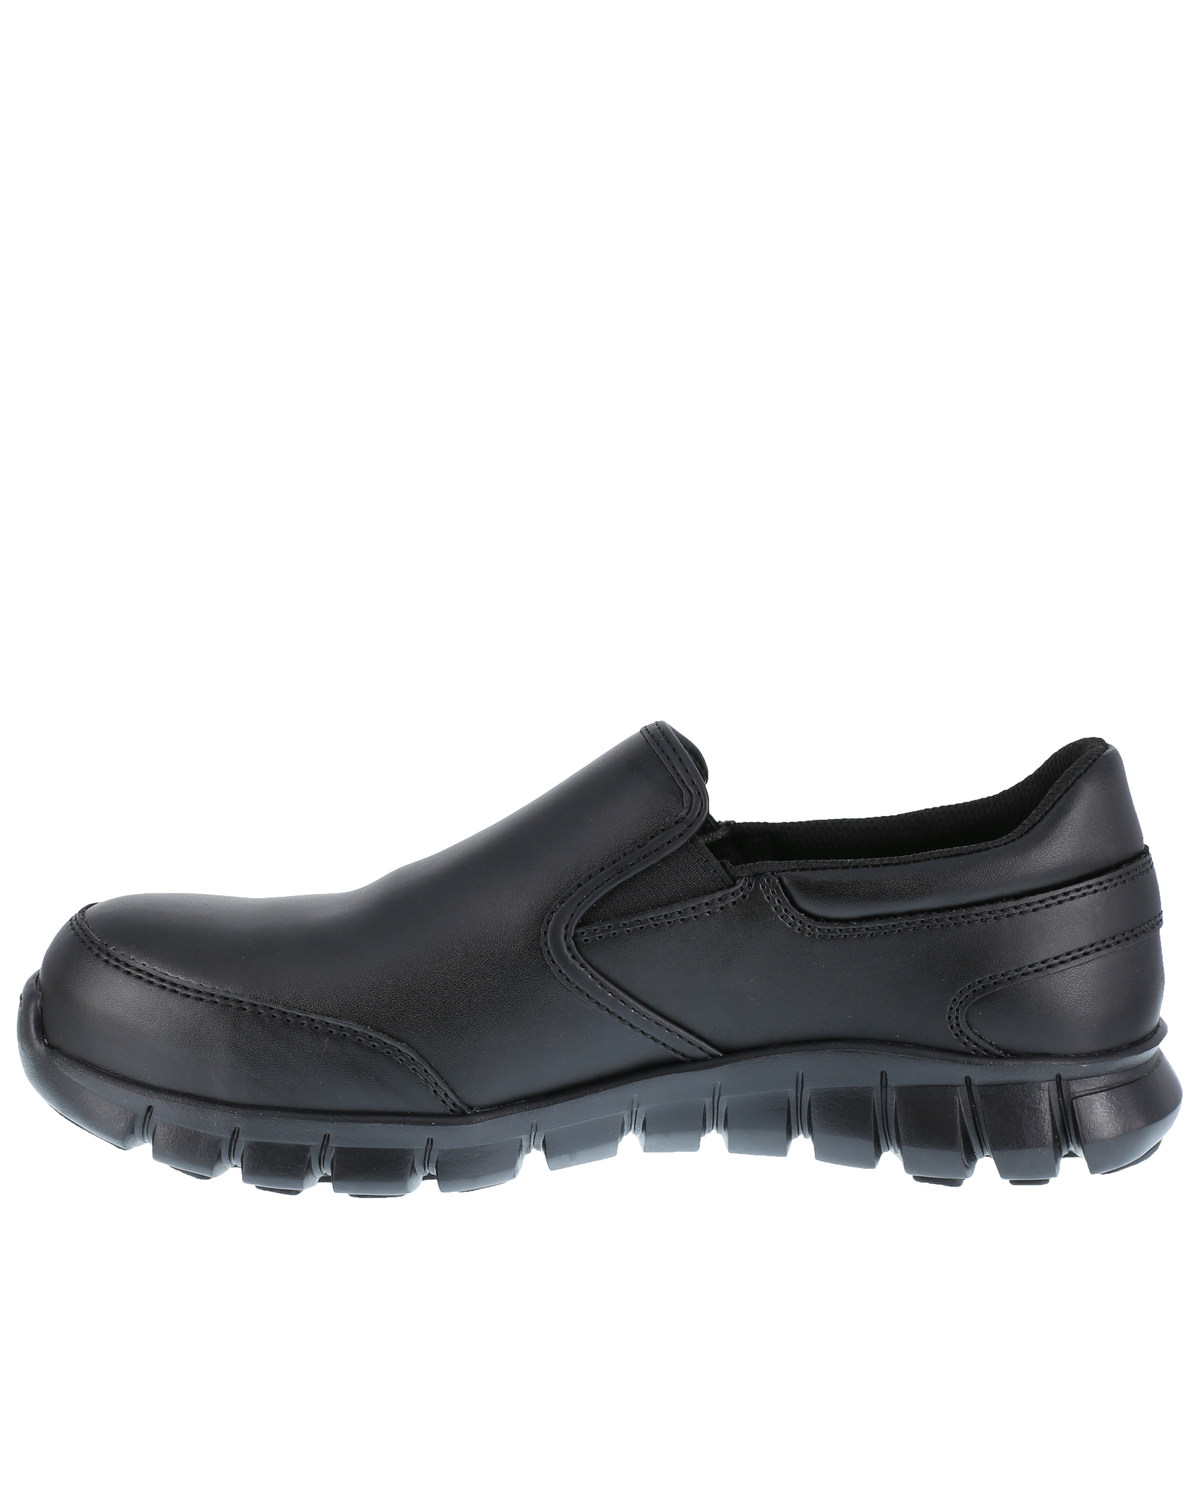 Reebok Work Men's Sublite Cushion Composite Toe ESD Athletic Slip-On Work Shoe Black - RB4036 - image 3 of 4